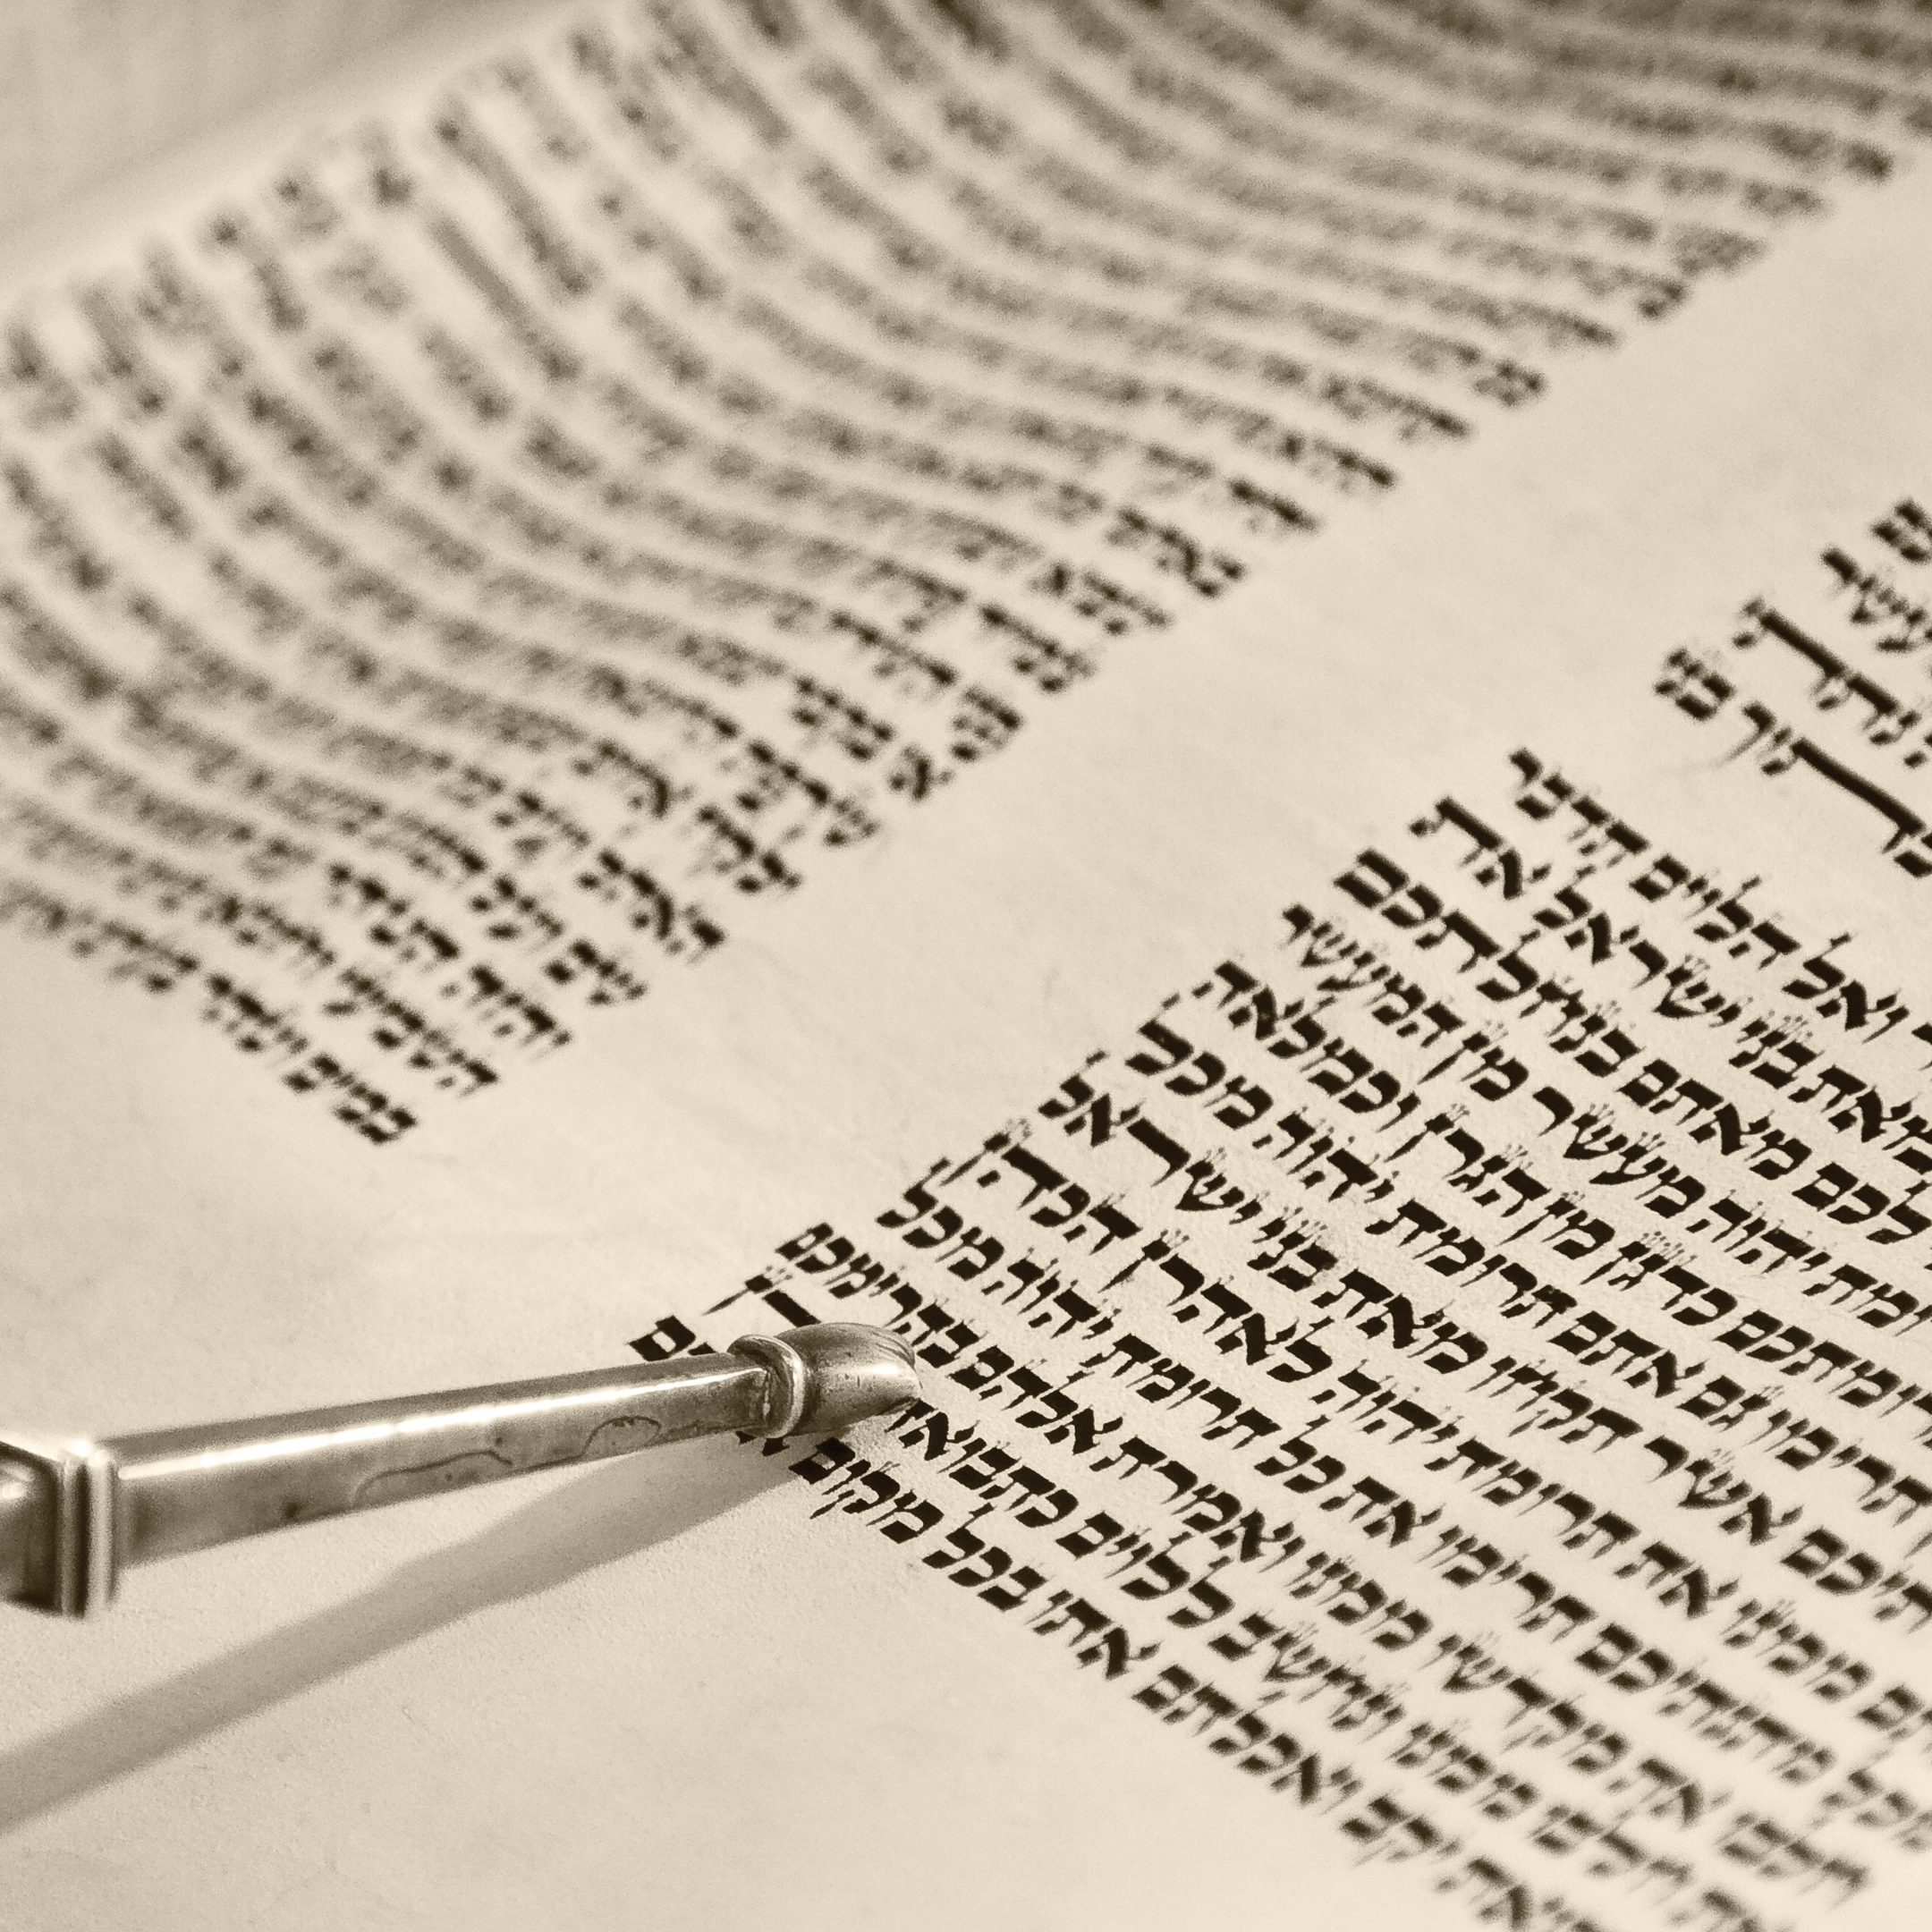 TORAH STUDY WITH RABBI AKSELRAD